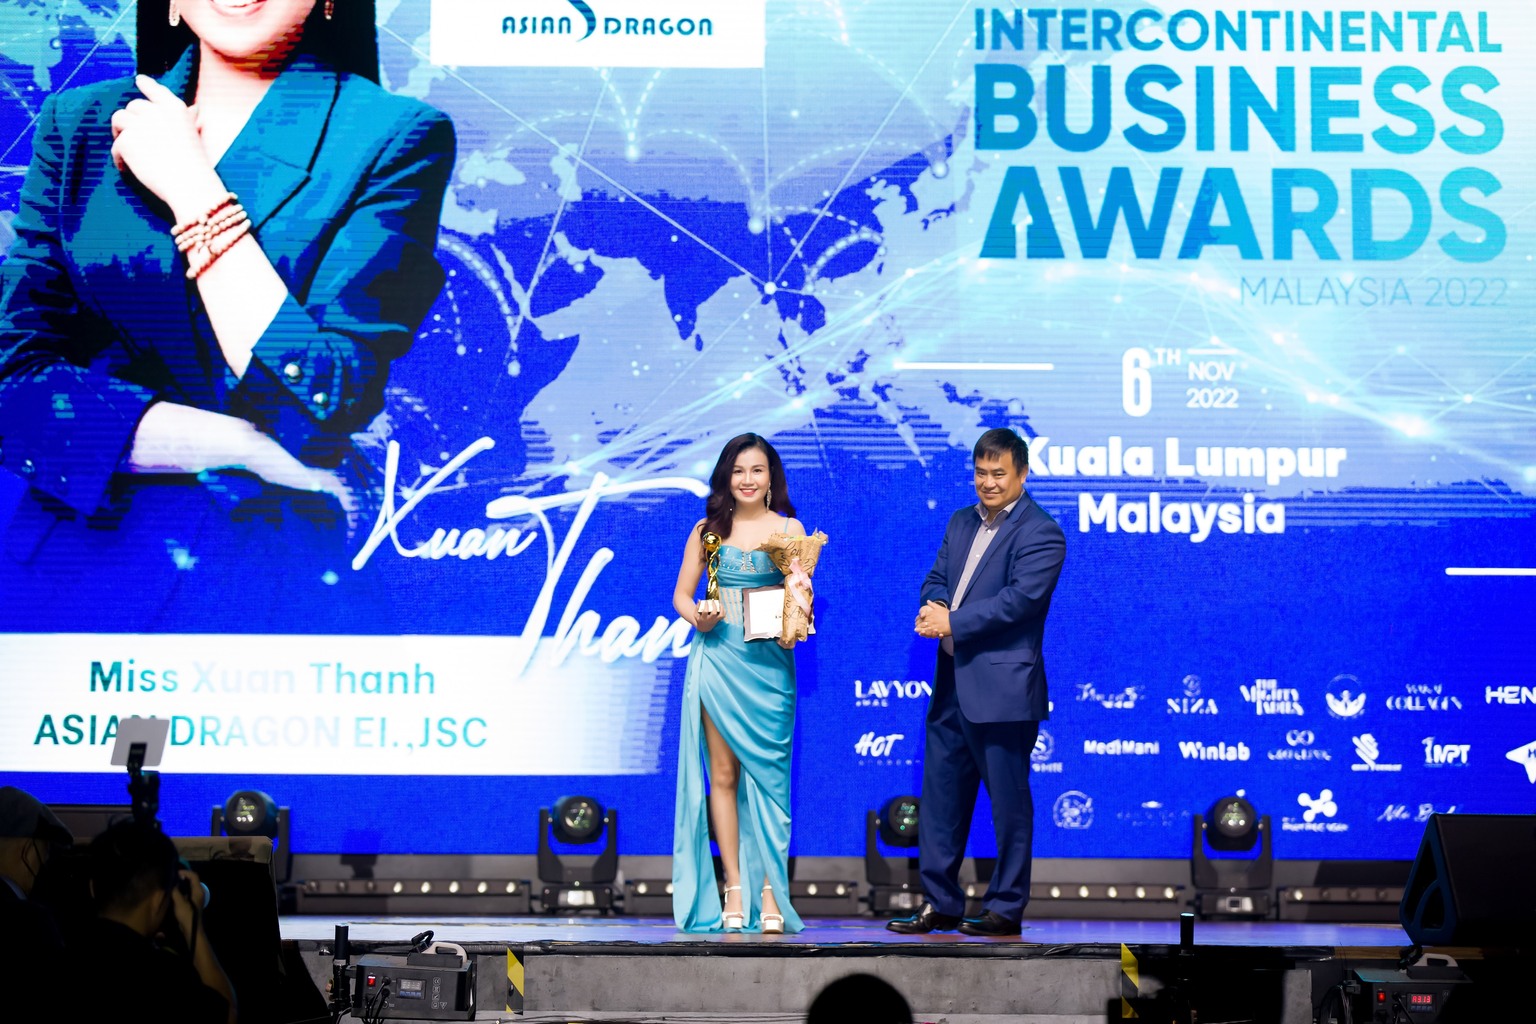 Asian Dragon received Top 100 Intercontinental Typical Entrepreneur, Enterprise